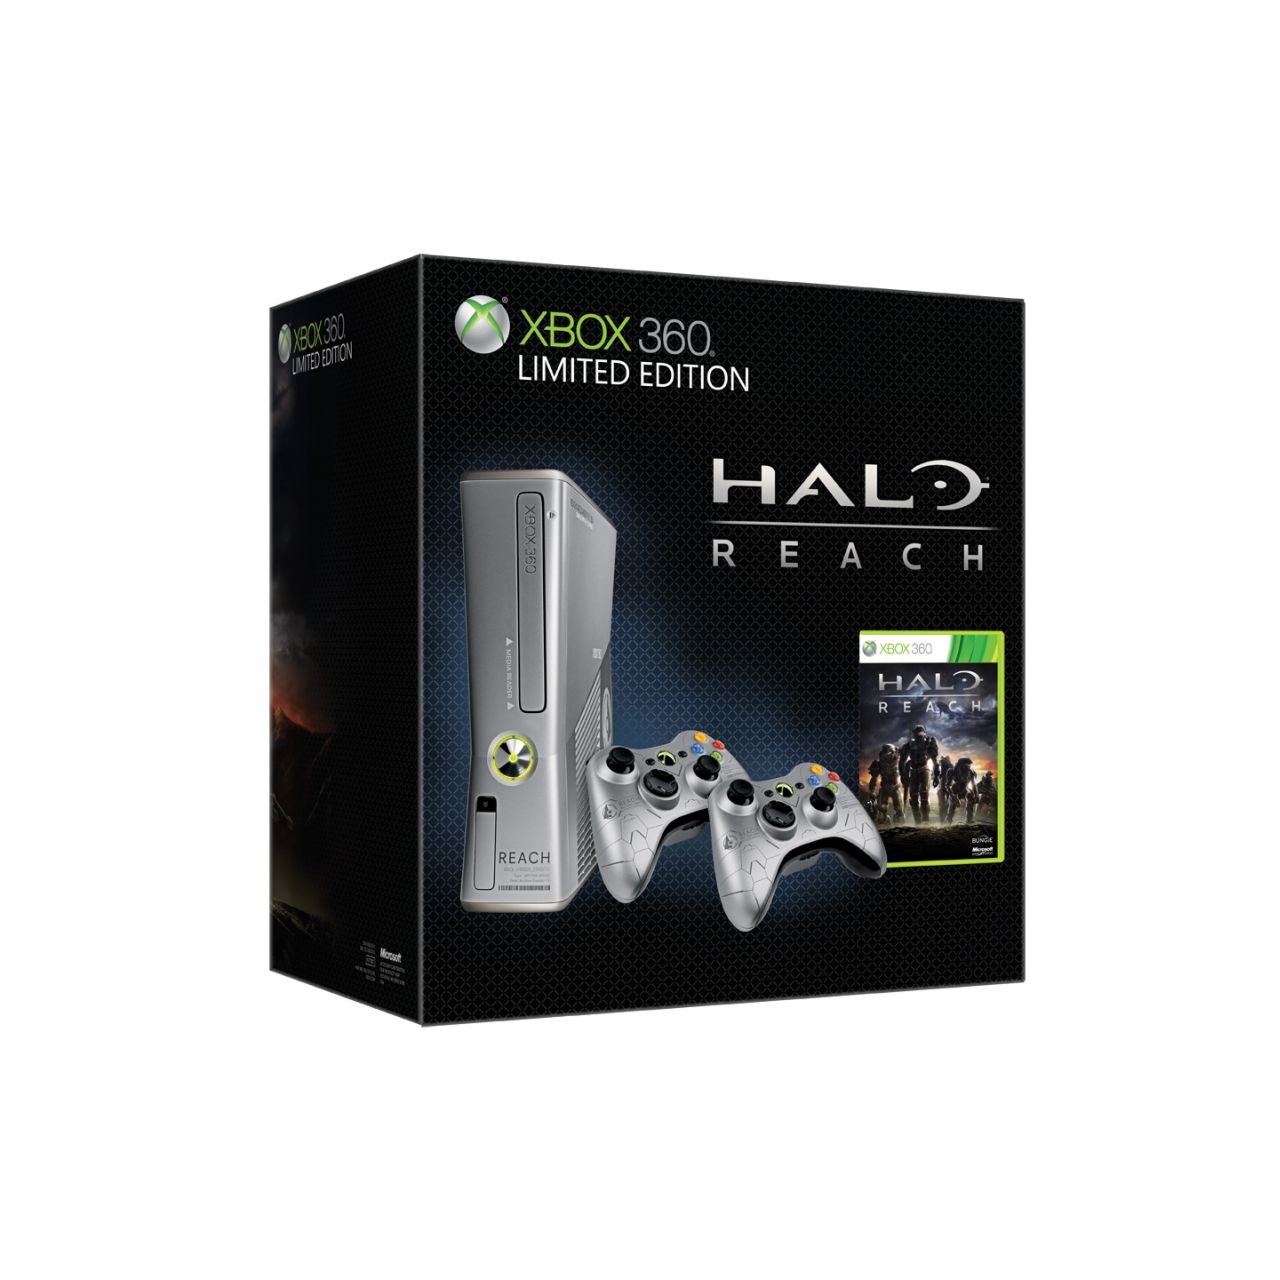 News: Halo: Reach Xbox 360 Limited Edition Bundle Announced | MegaGames